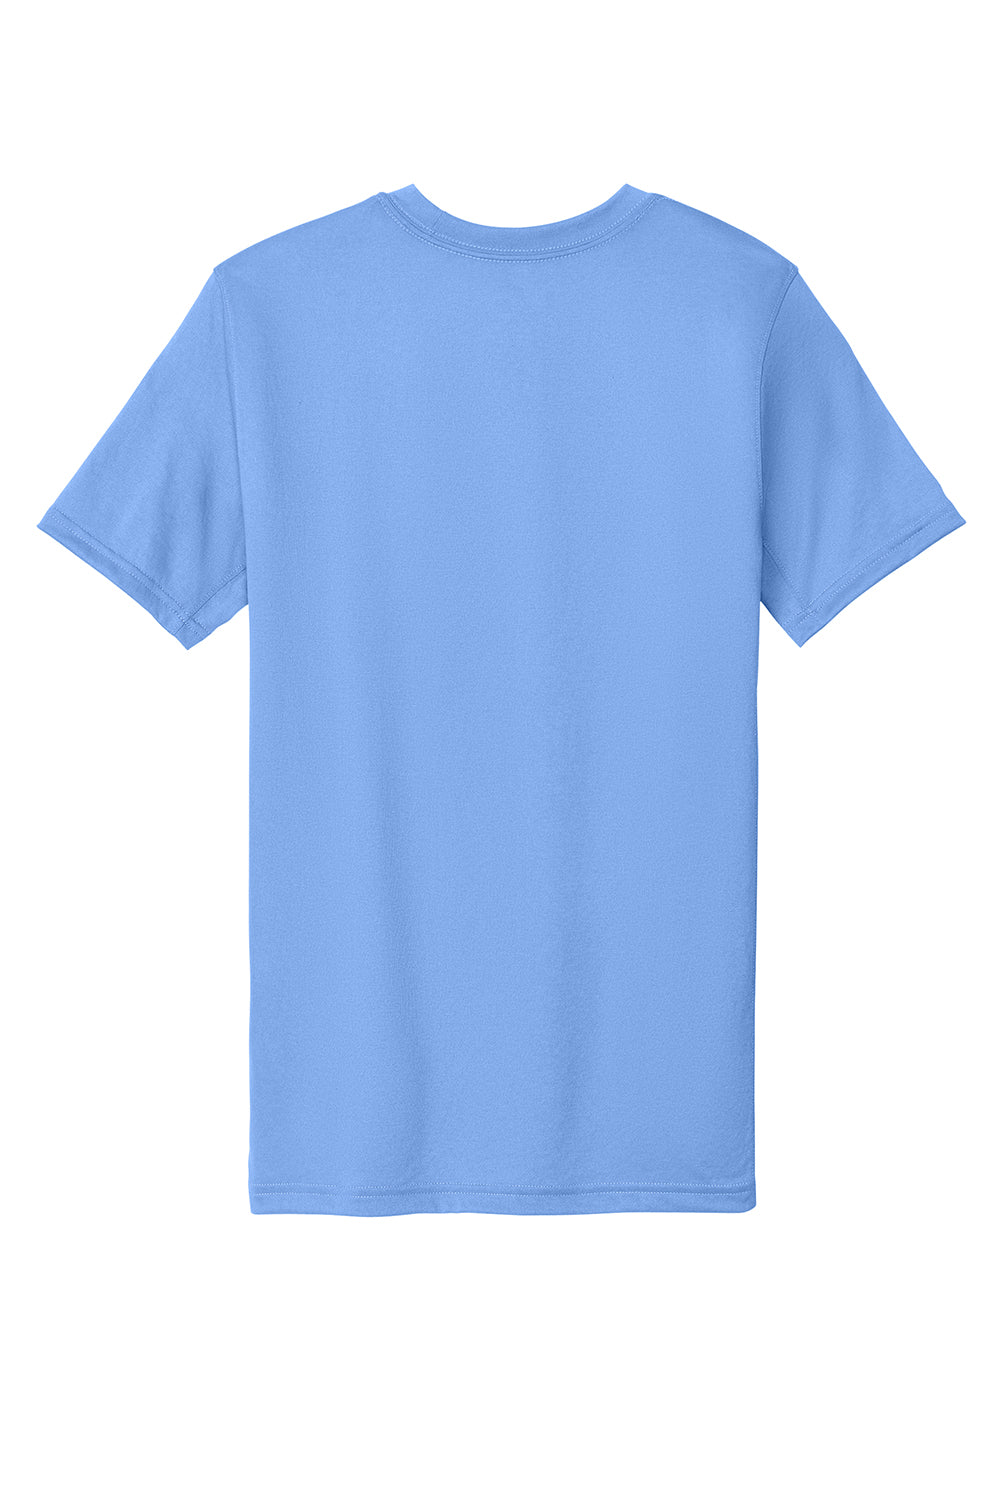 Nike NKDX8730 Mens rLegend Dri-Fit Moisture Wicking Short Sleeve Crewneck T-Shirt Valor Blue Flat Back